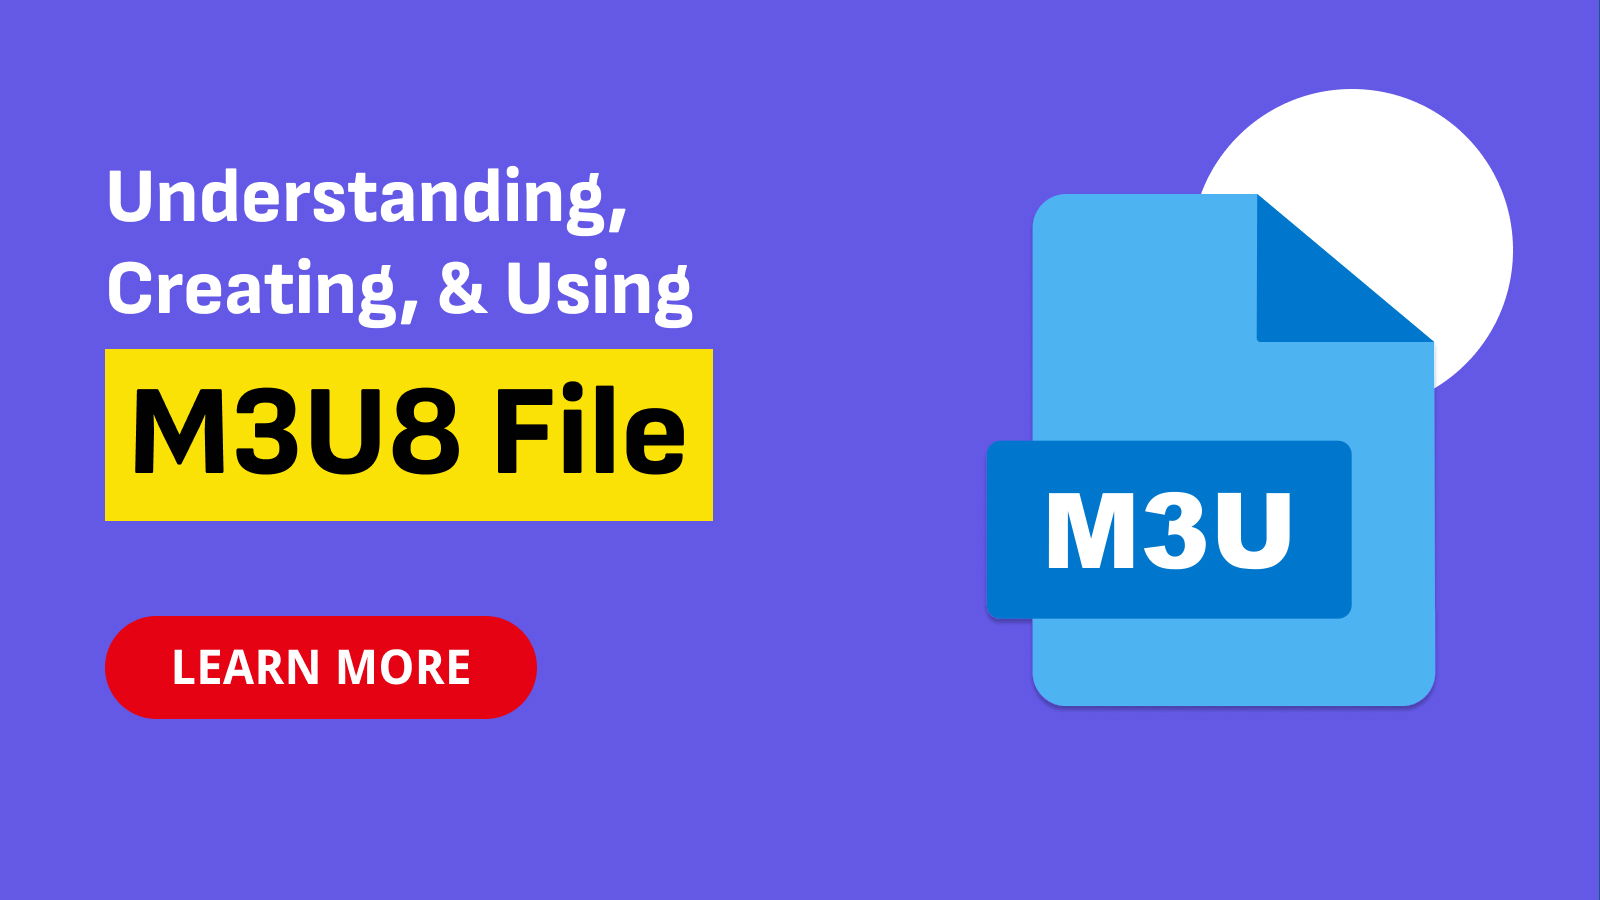 Guide to M3U8 Files